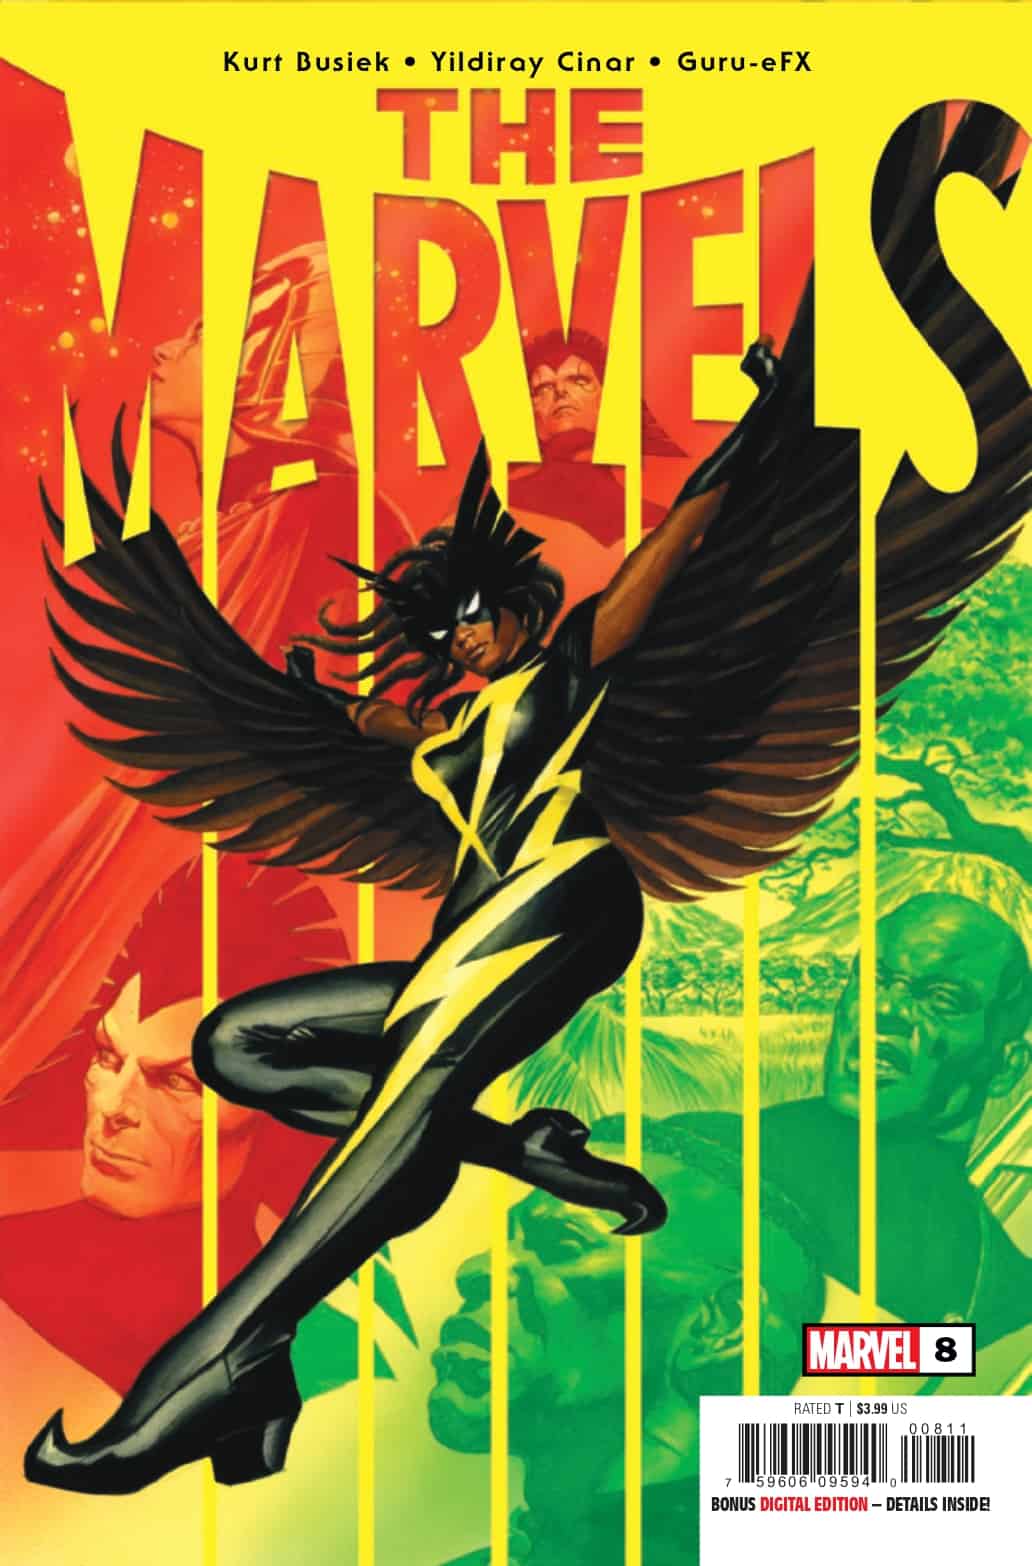 SNEAK PEEK: Preview of Marvel Comics' The Marvels #8 (On Sale 2/2!) - Comic Watch